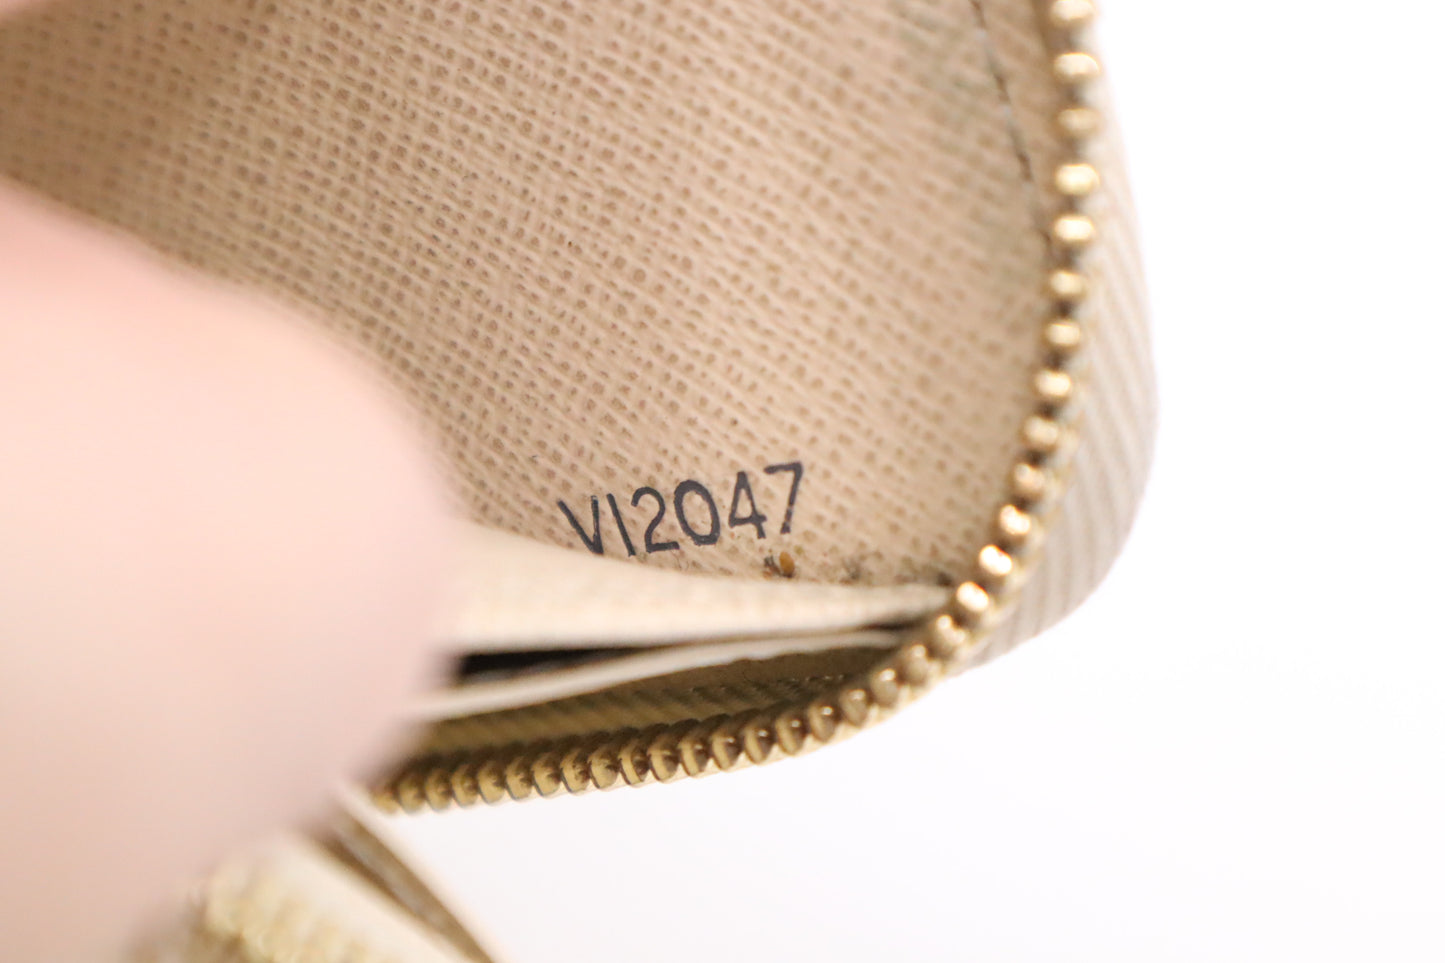 Louis Vuitton Long Zippy Wallet in Damiere Azur Canvas